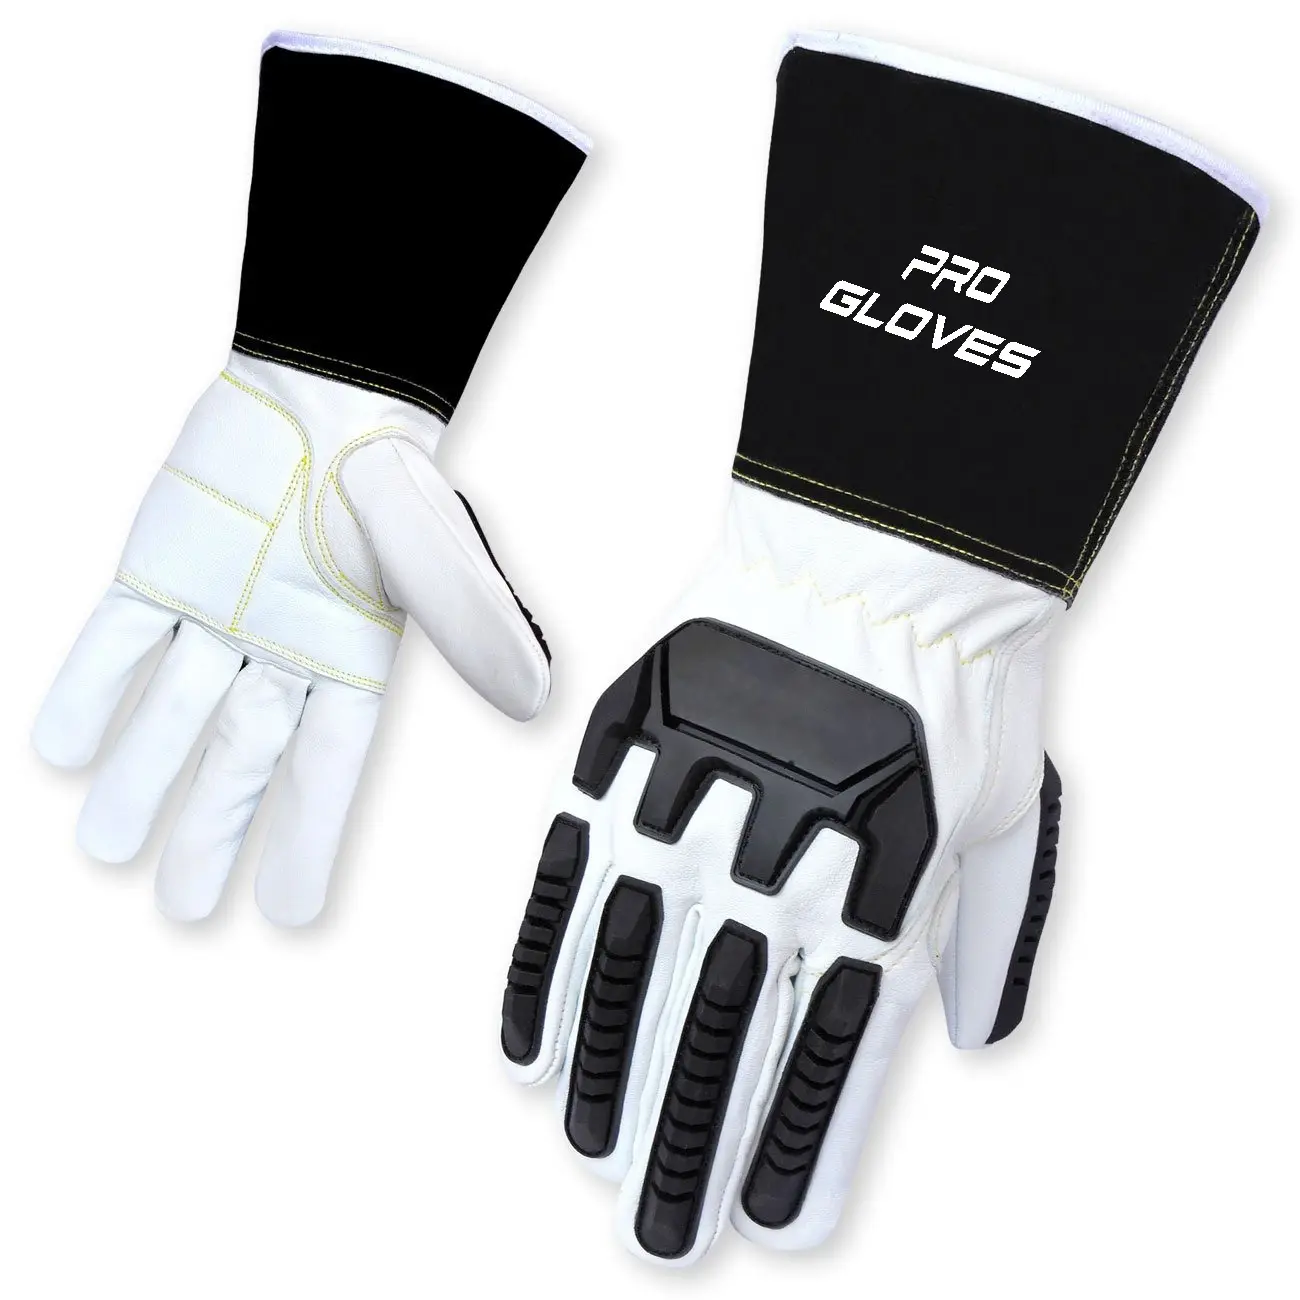 Anti-Mashing Anti-Collision Anti-Skid Anti-Shock Anti-Stab Anti-Cutting And Impact-Resistant Industrial Oil Gloves